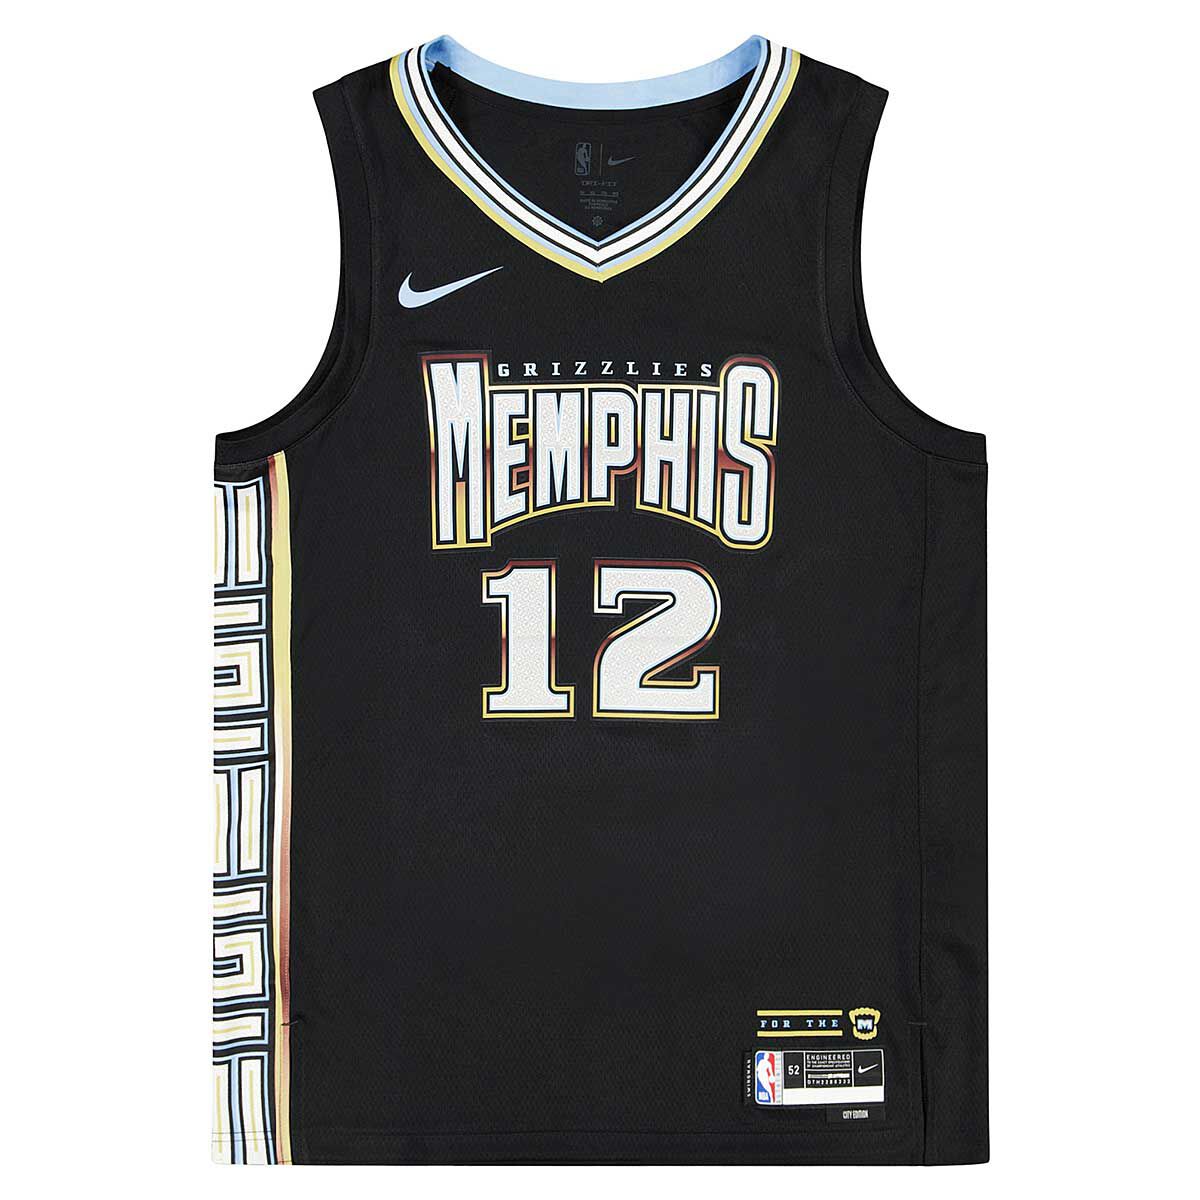 Kaufen Sie Nba Memphis Grizzlies Dri Fit City Edition Swingman Jersey